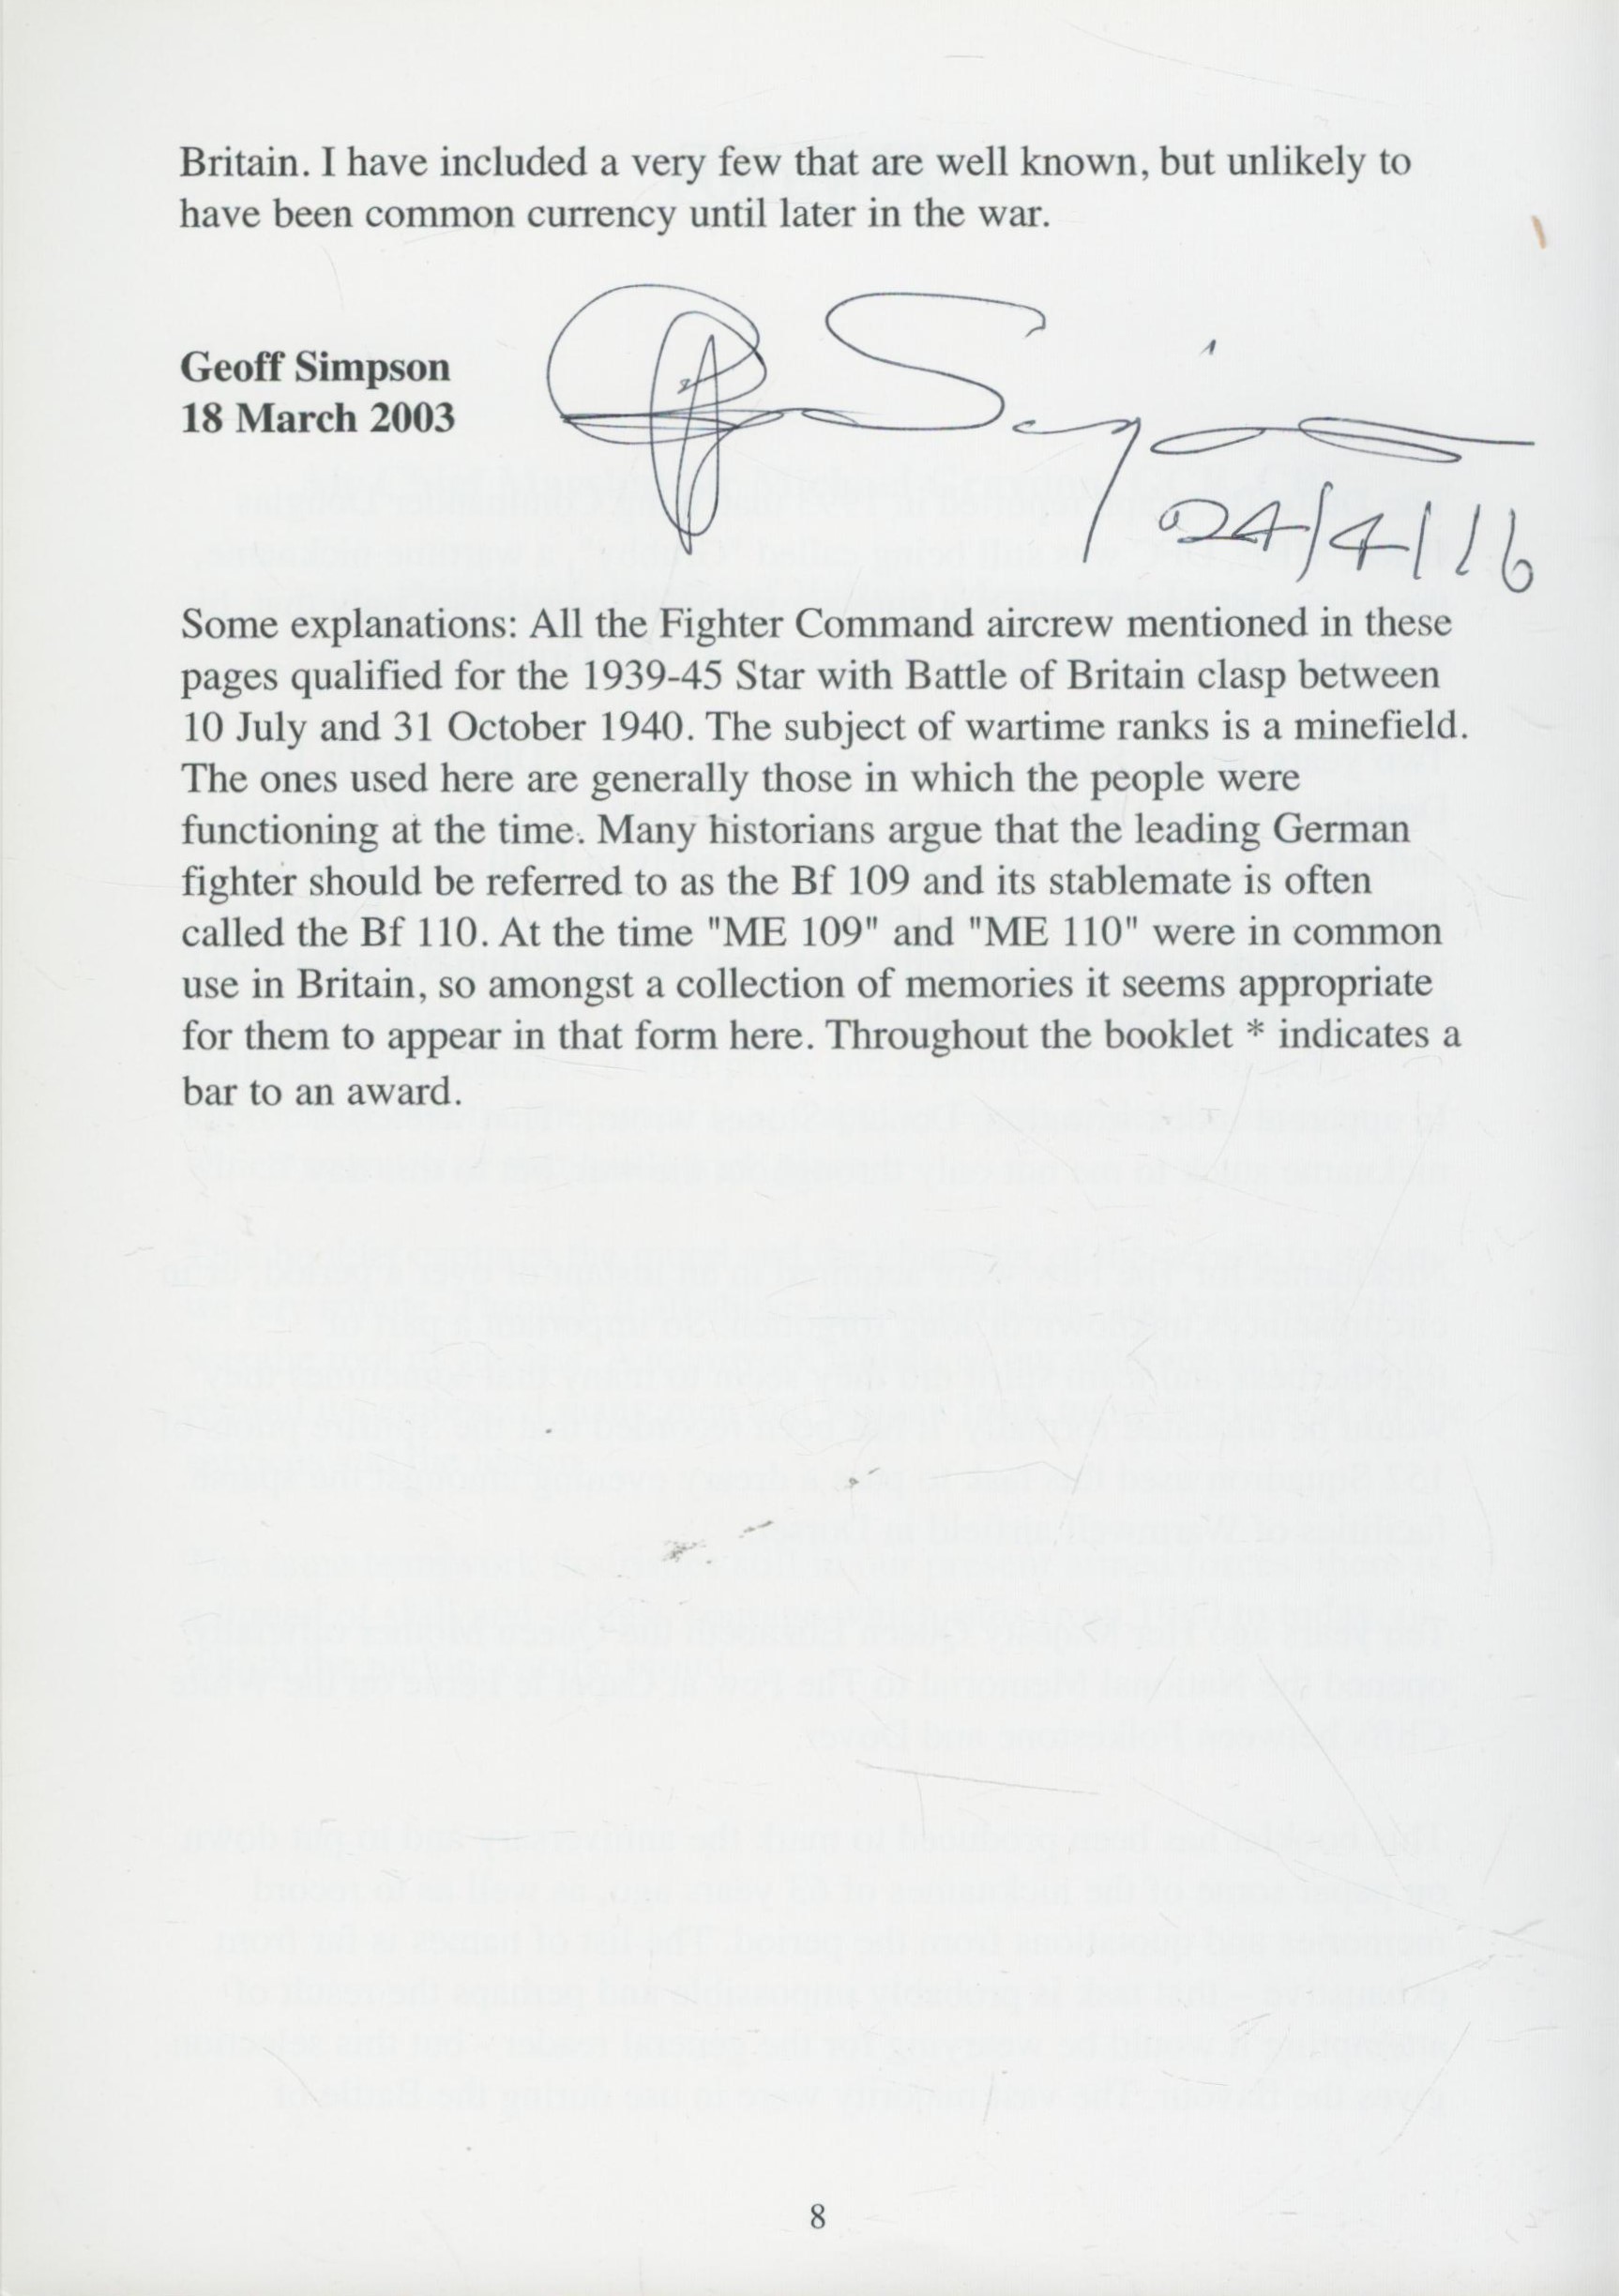 WW2 Geoff Simpson Signed Mortal Danger Paperback Booklet. Good condition Est. - Image 2 of 2